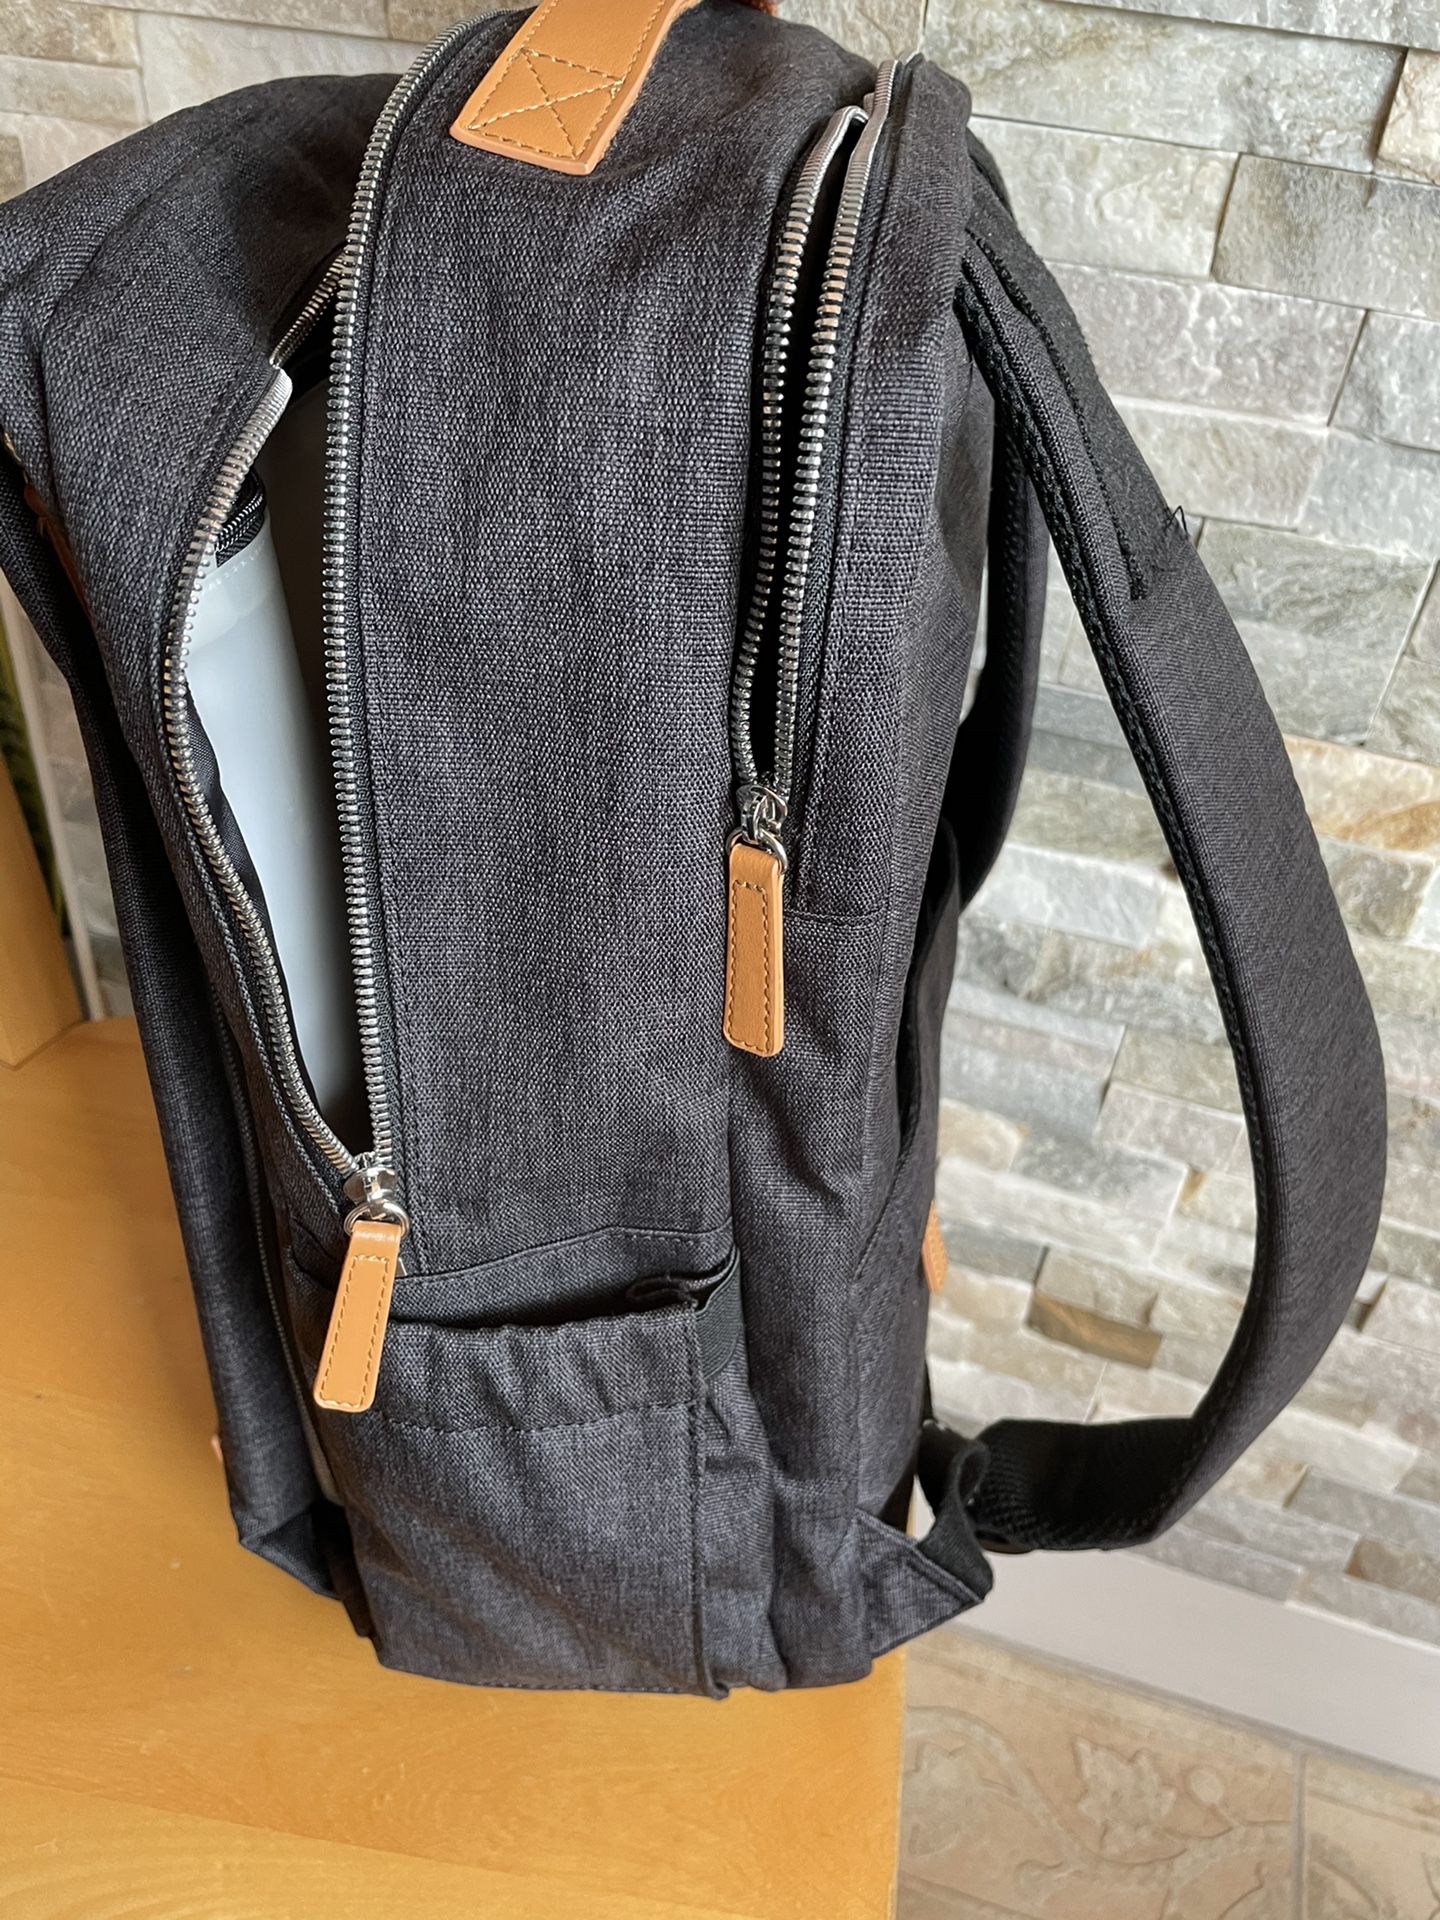 Smart Travel Backpack